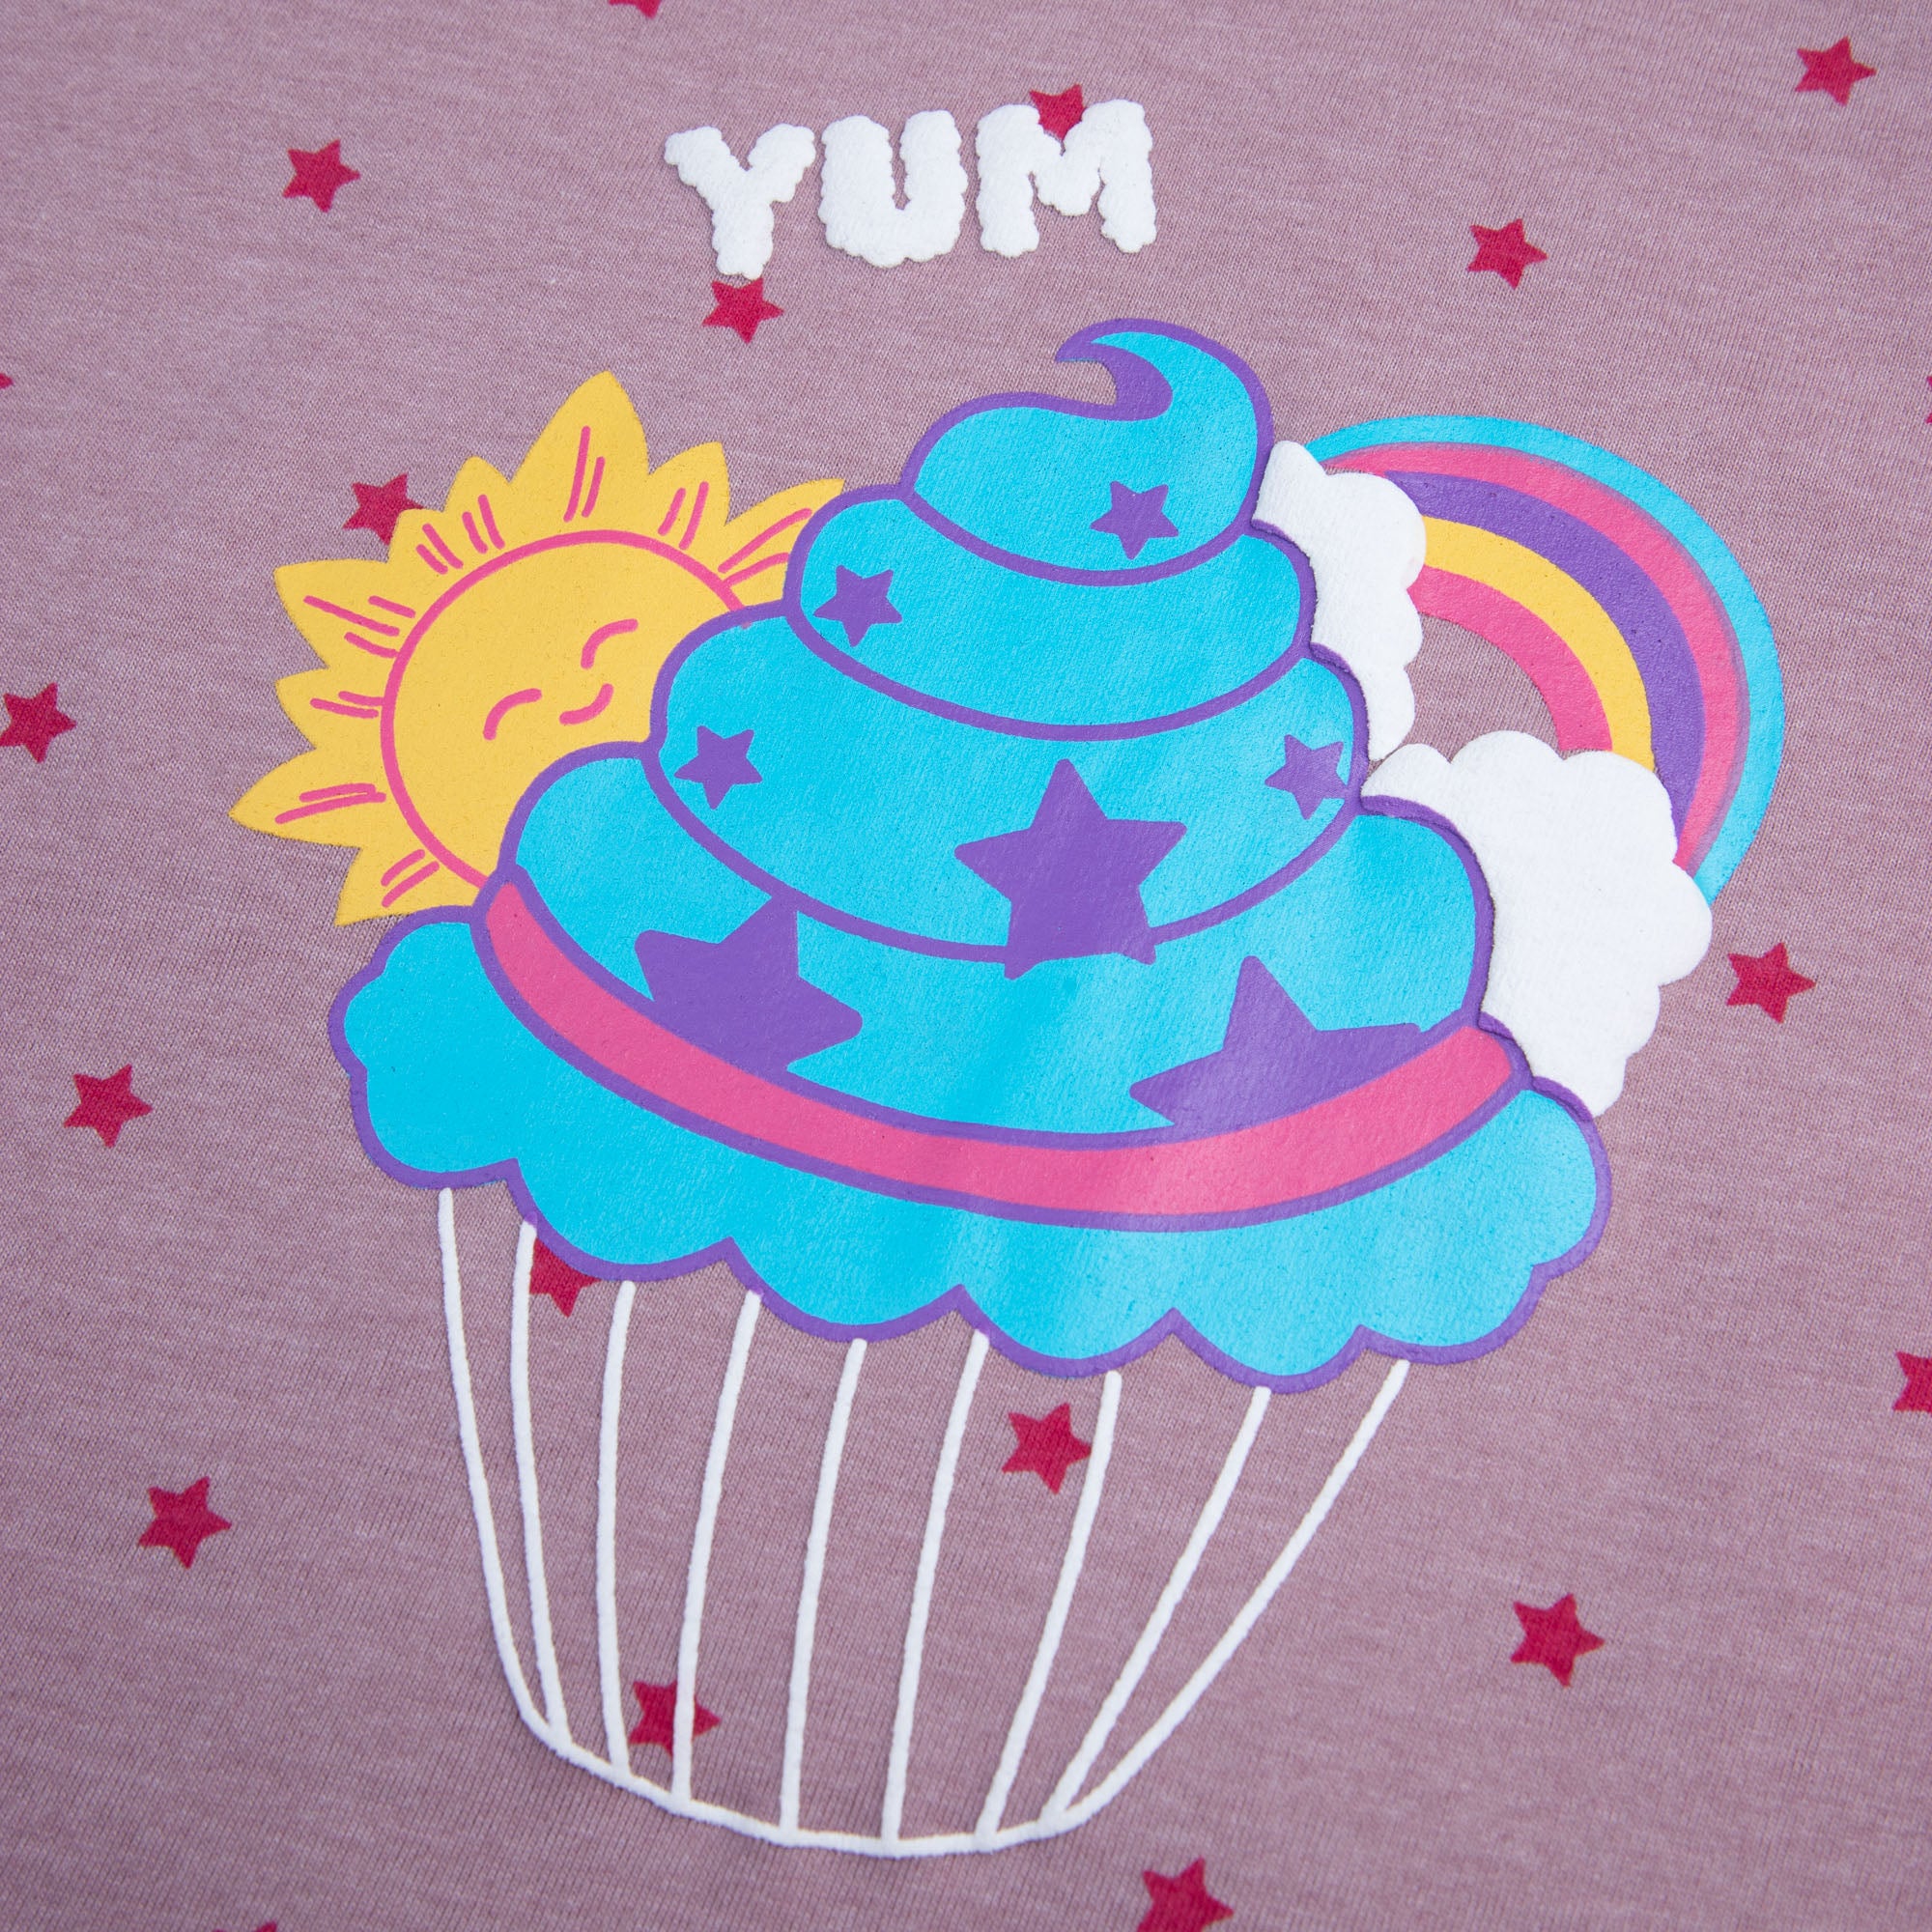 Sweet Yum Printed T-shirt